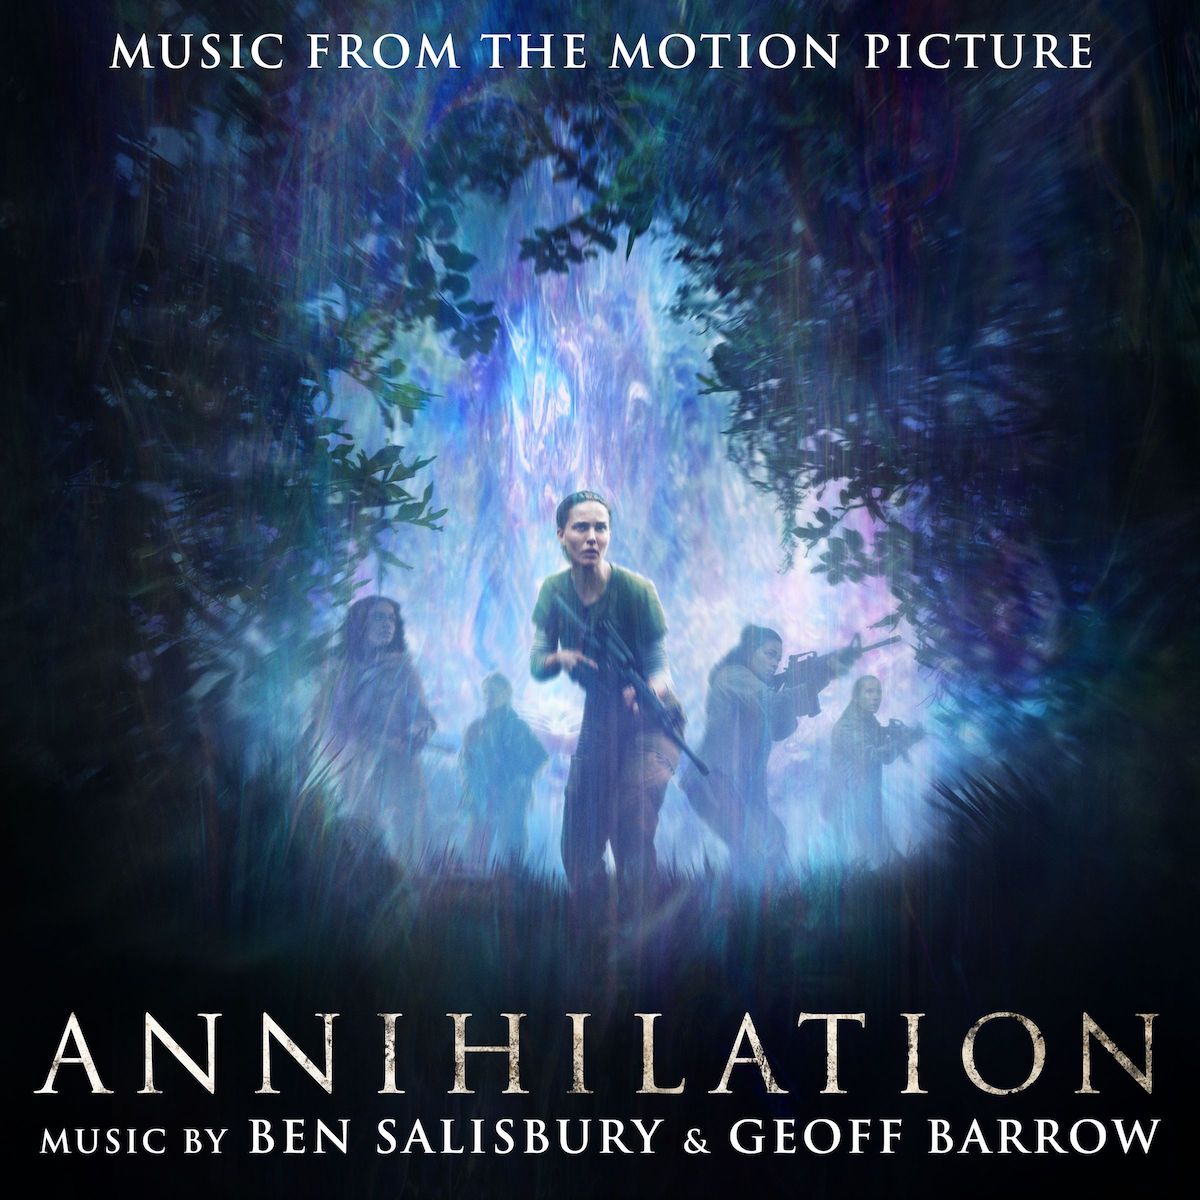 annihilation-soundtrack-review-inline.jpg